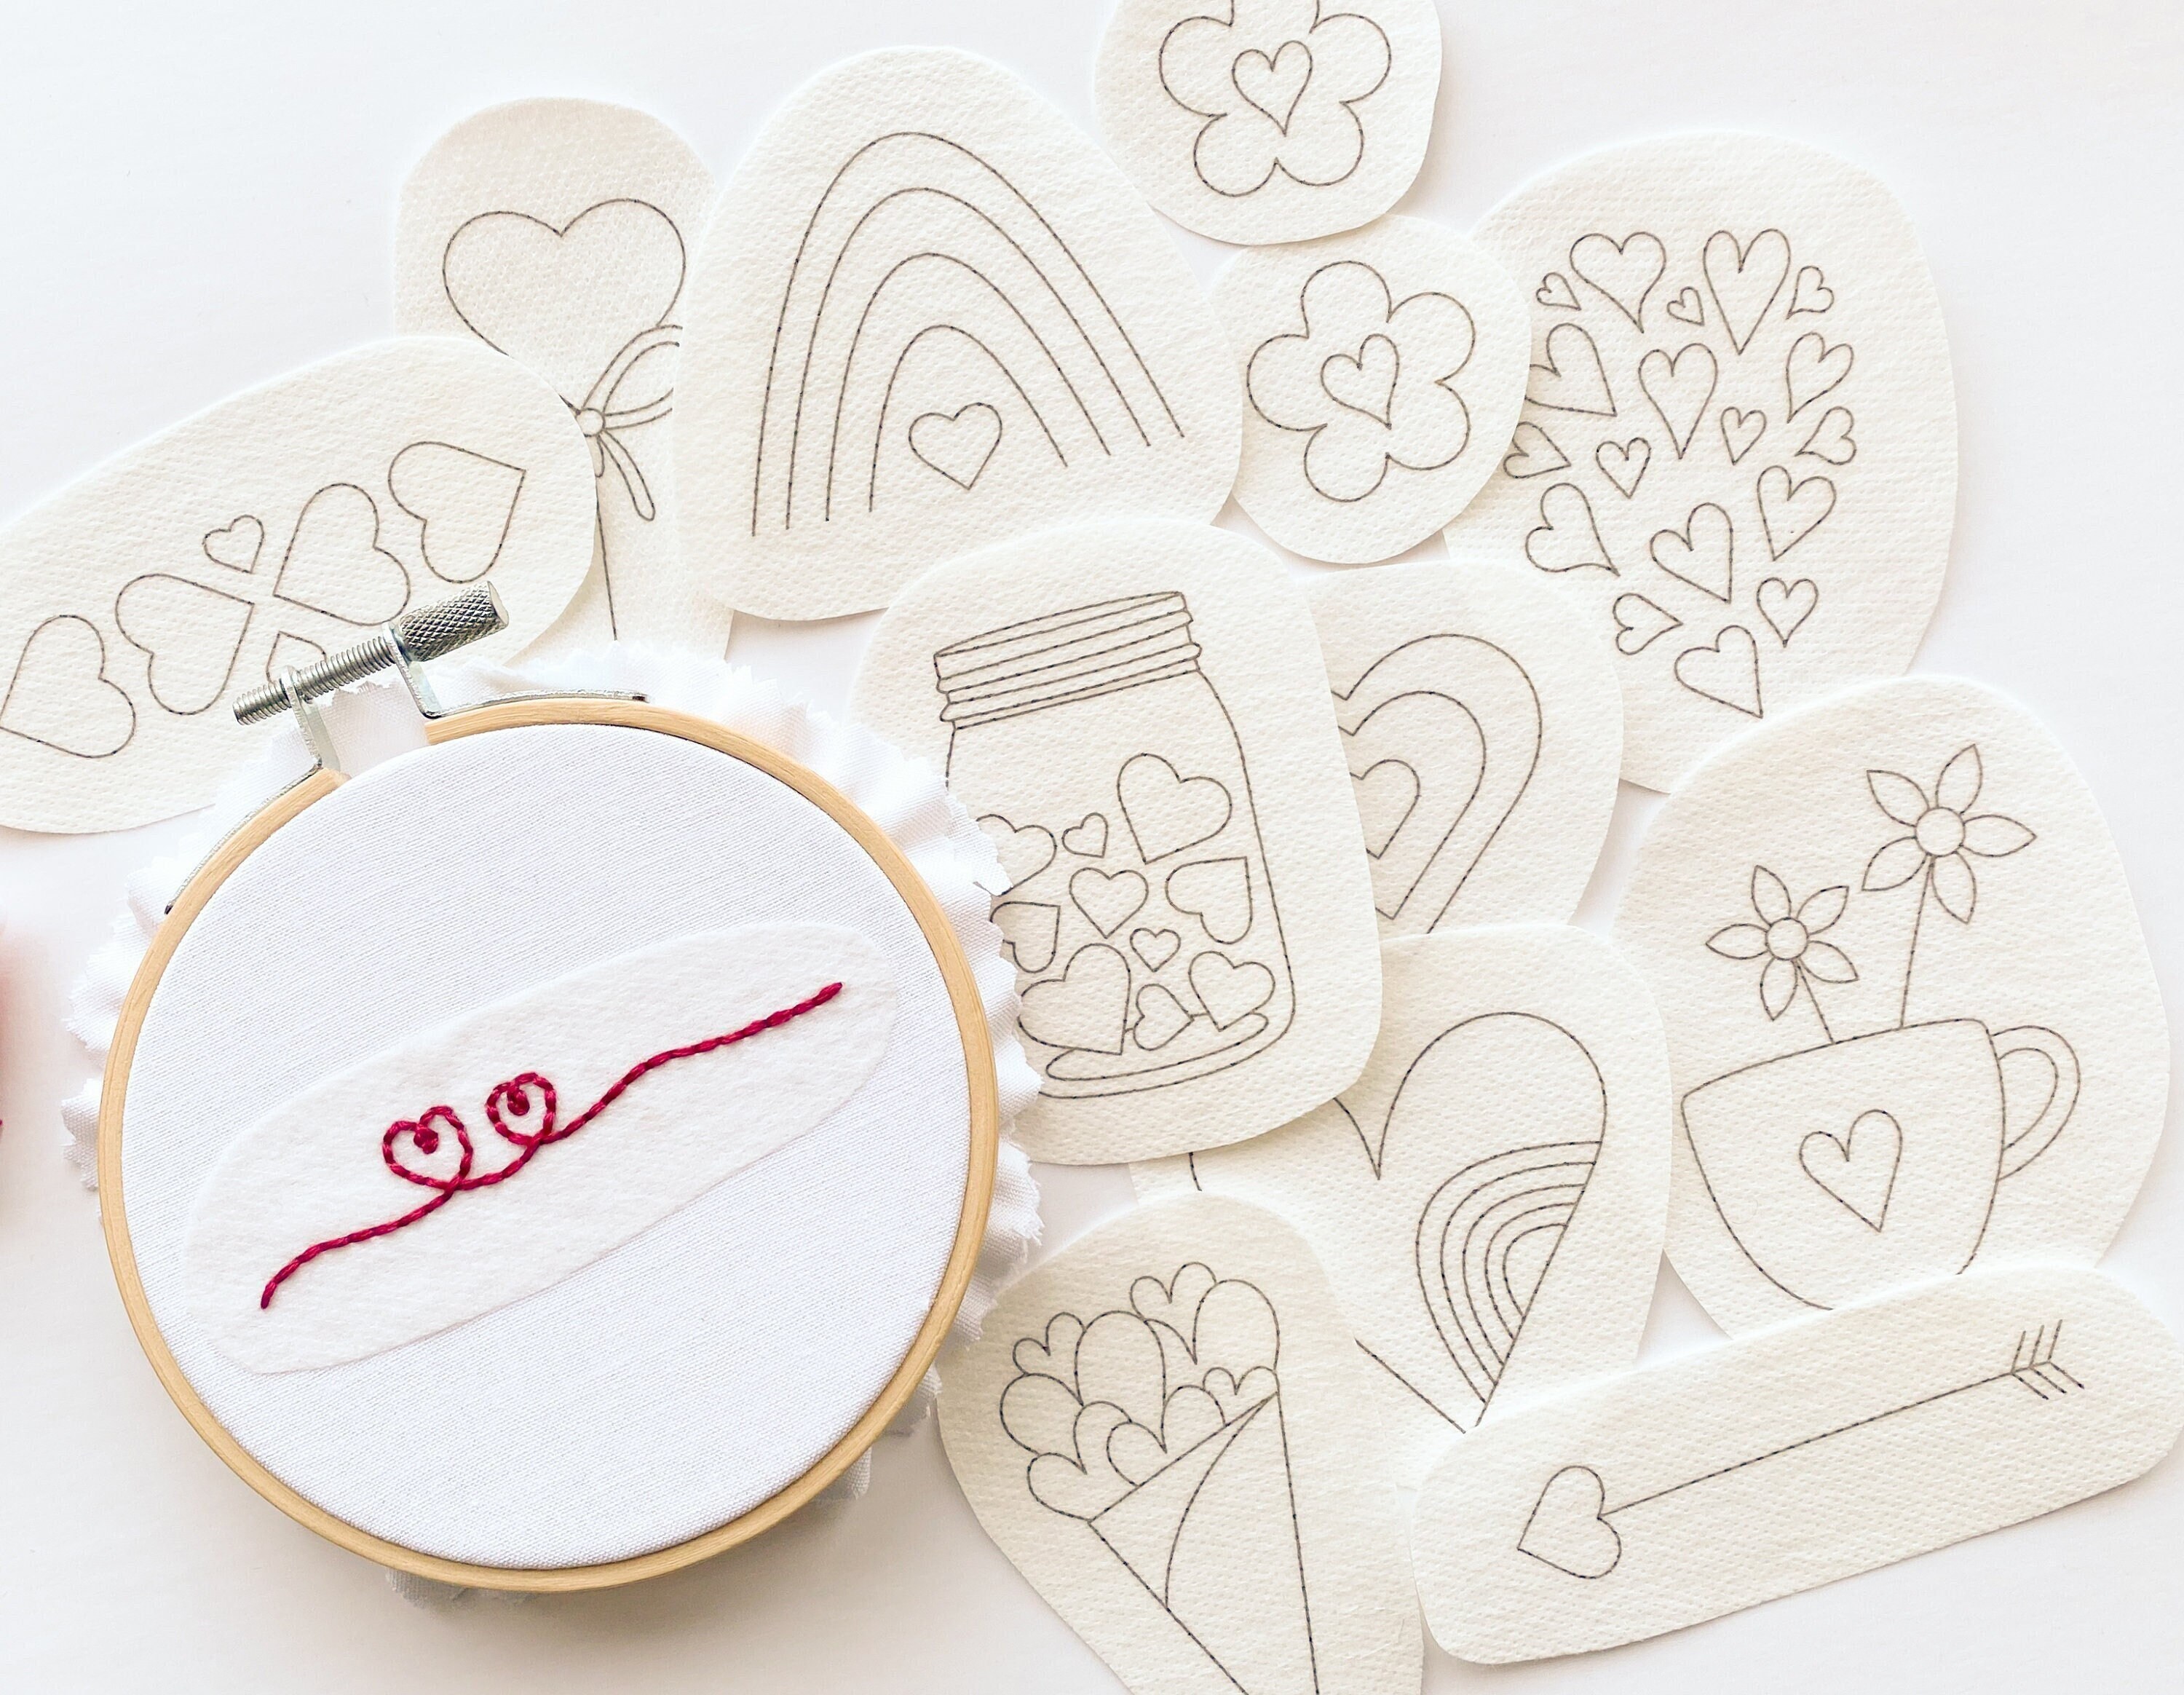 Mini Hearts Embroidery Design, Heart Embroidery Design, Valentines Day  Embroidery Design, Cute Embroidery Designs for Valentines Day -  Israel